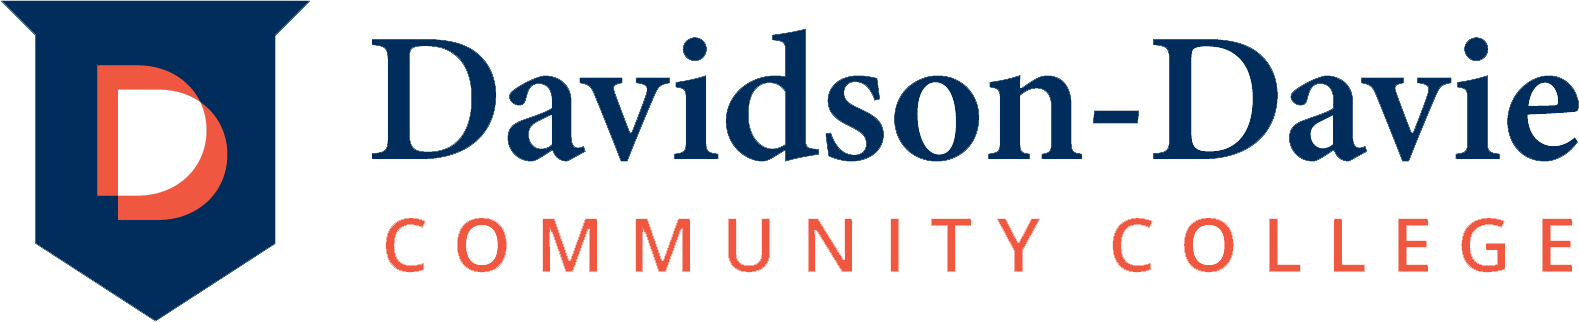 Davidson-Davie Community College (Logo)